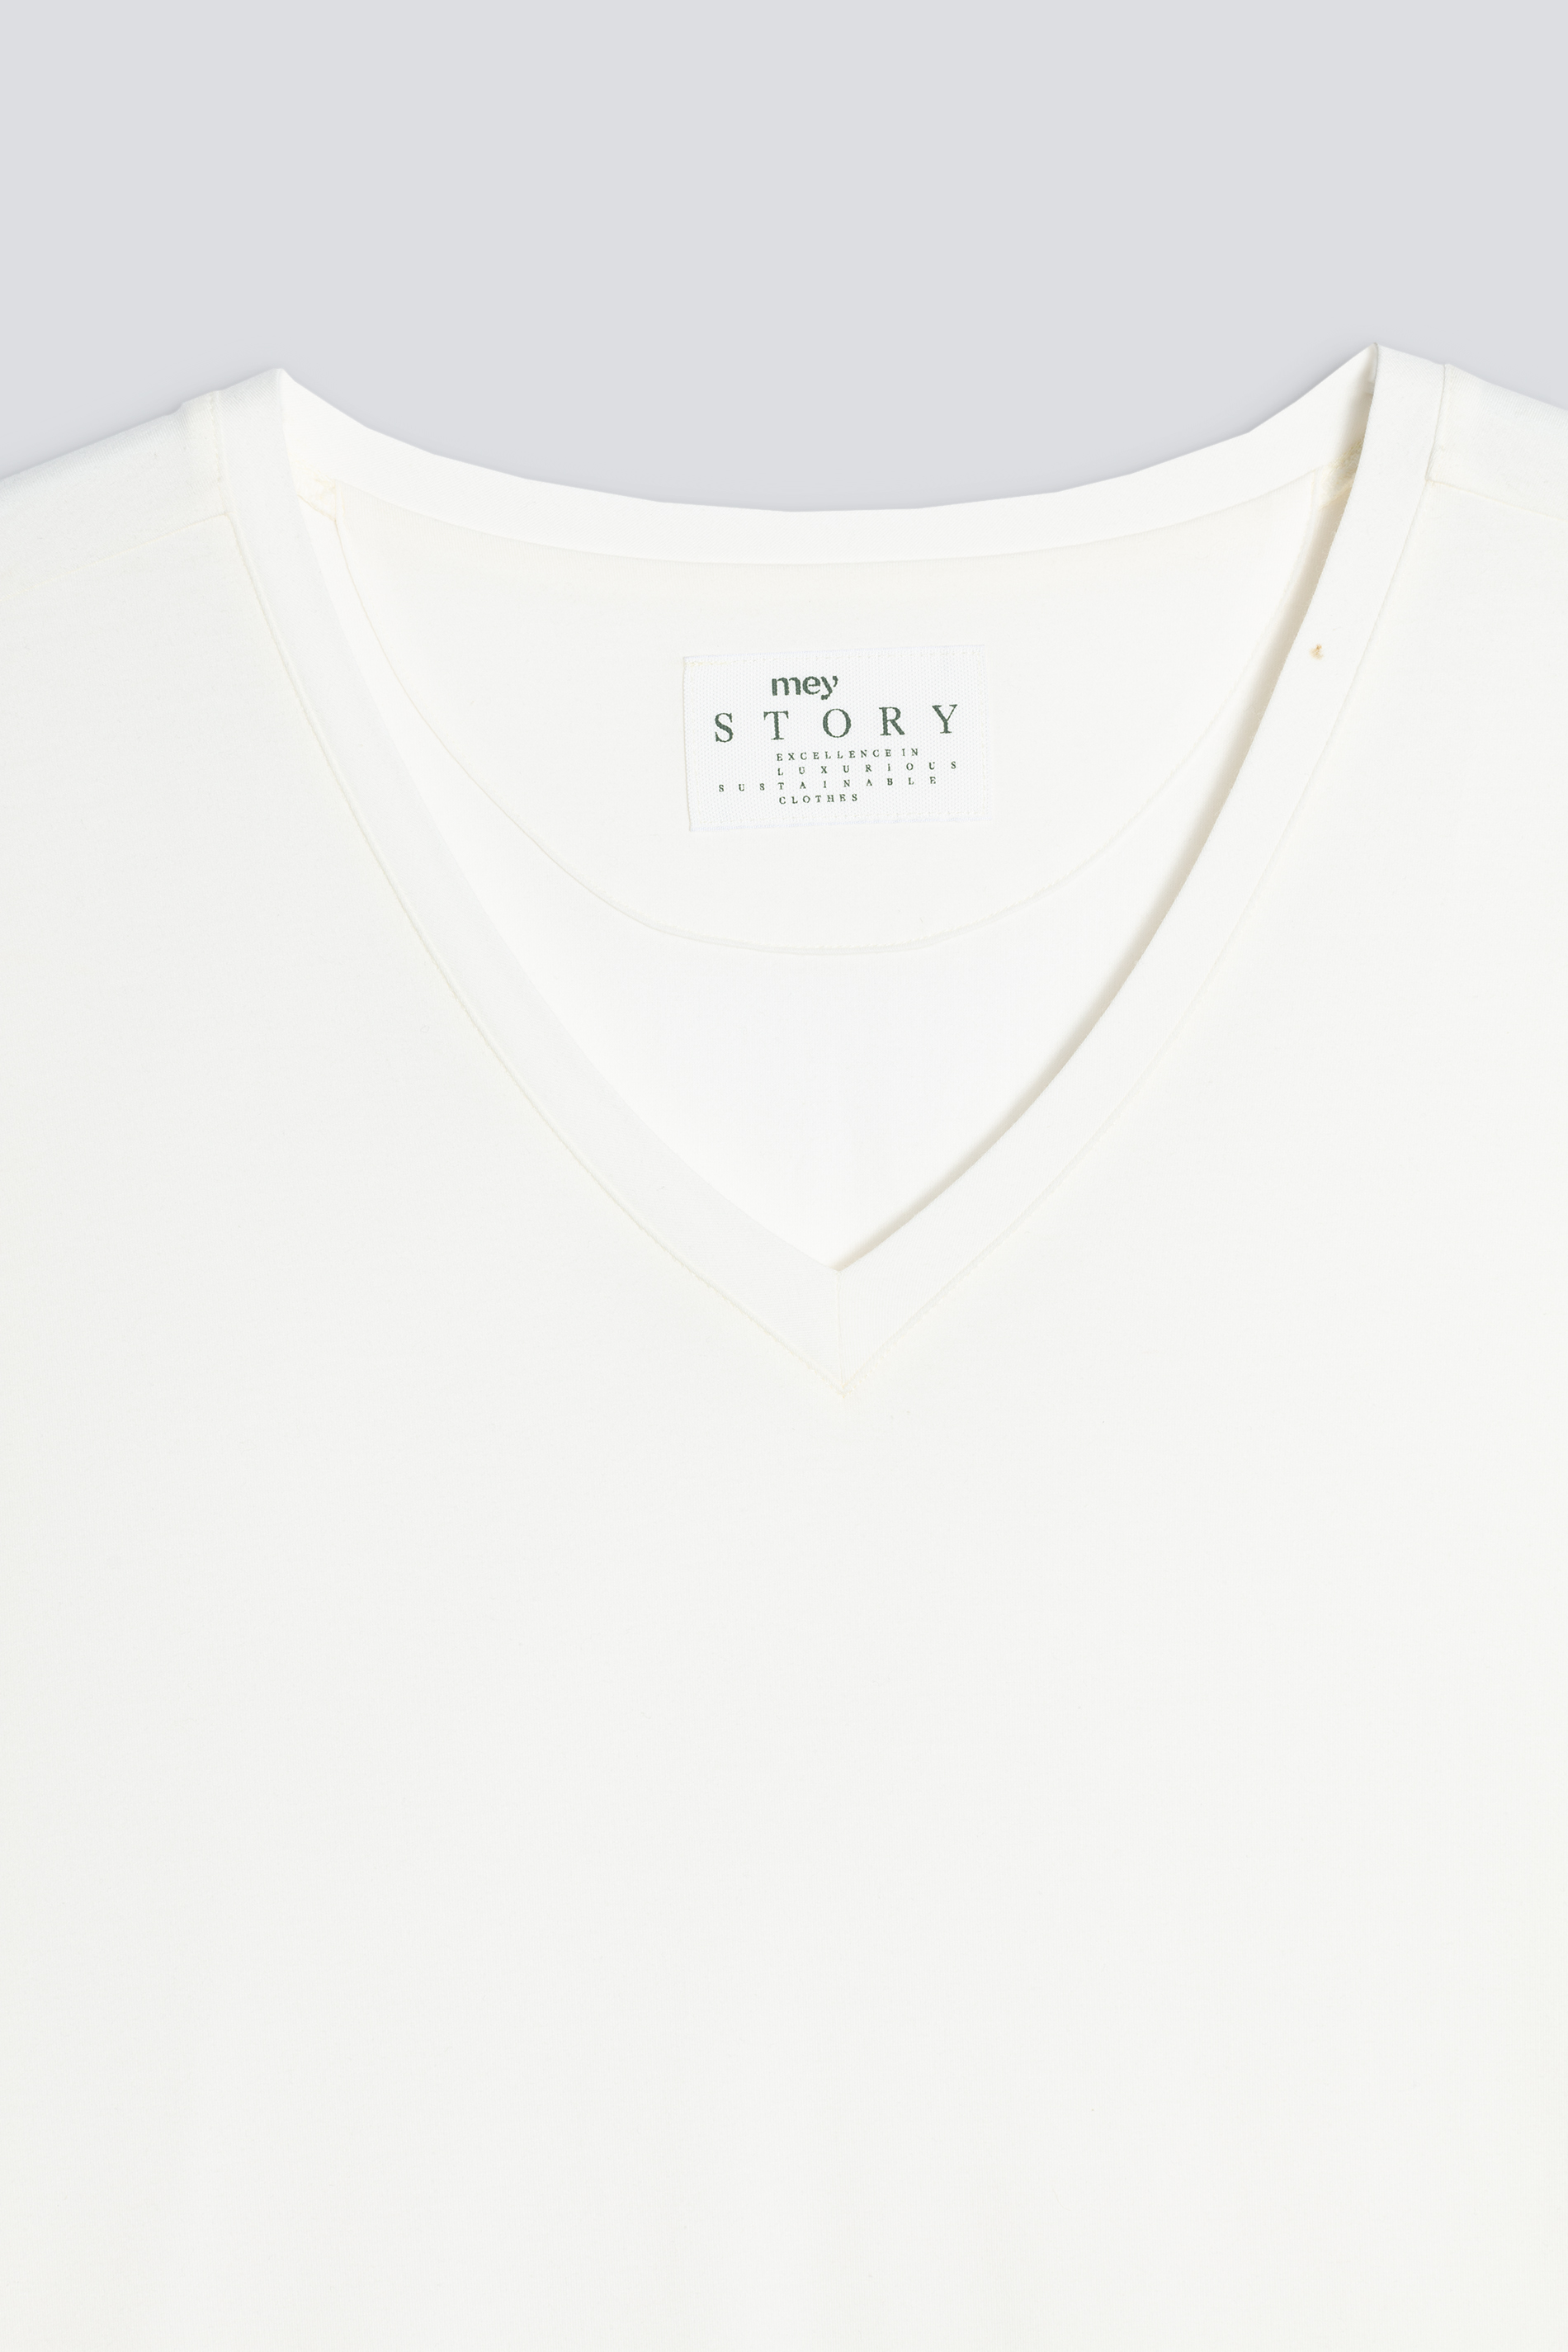 V-neck T-shirt Whisper White Serie Magila Singola Detail View 01 | mey®